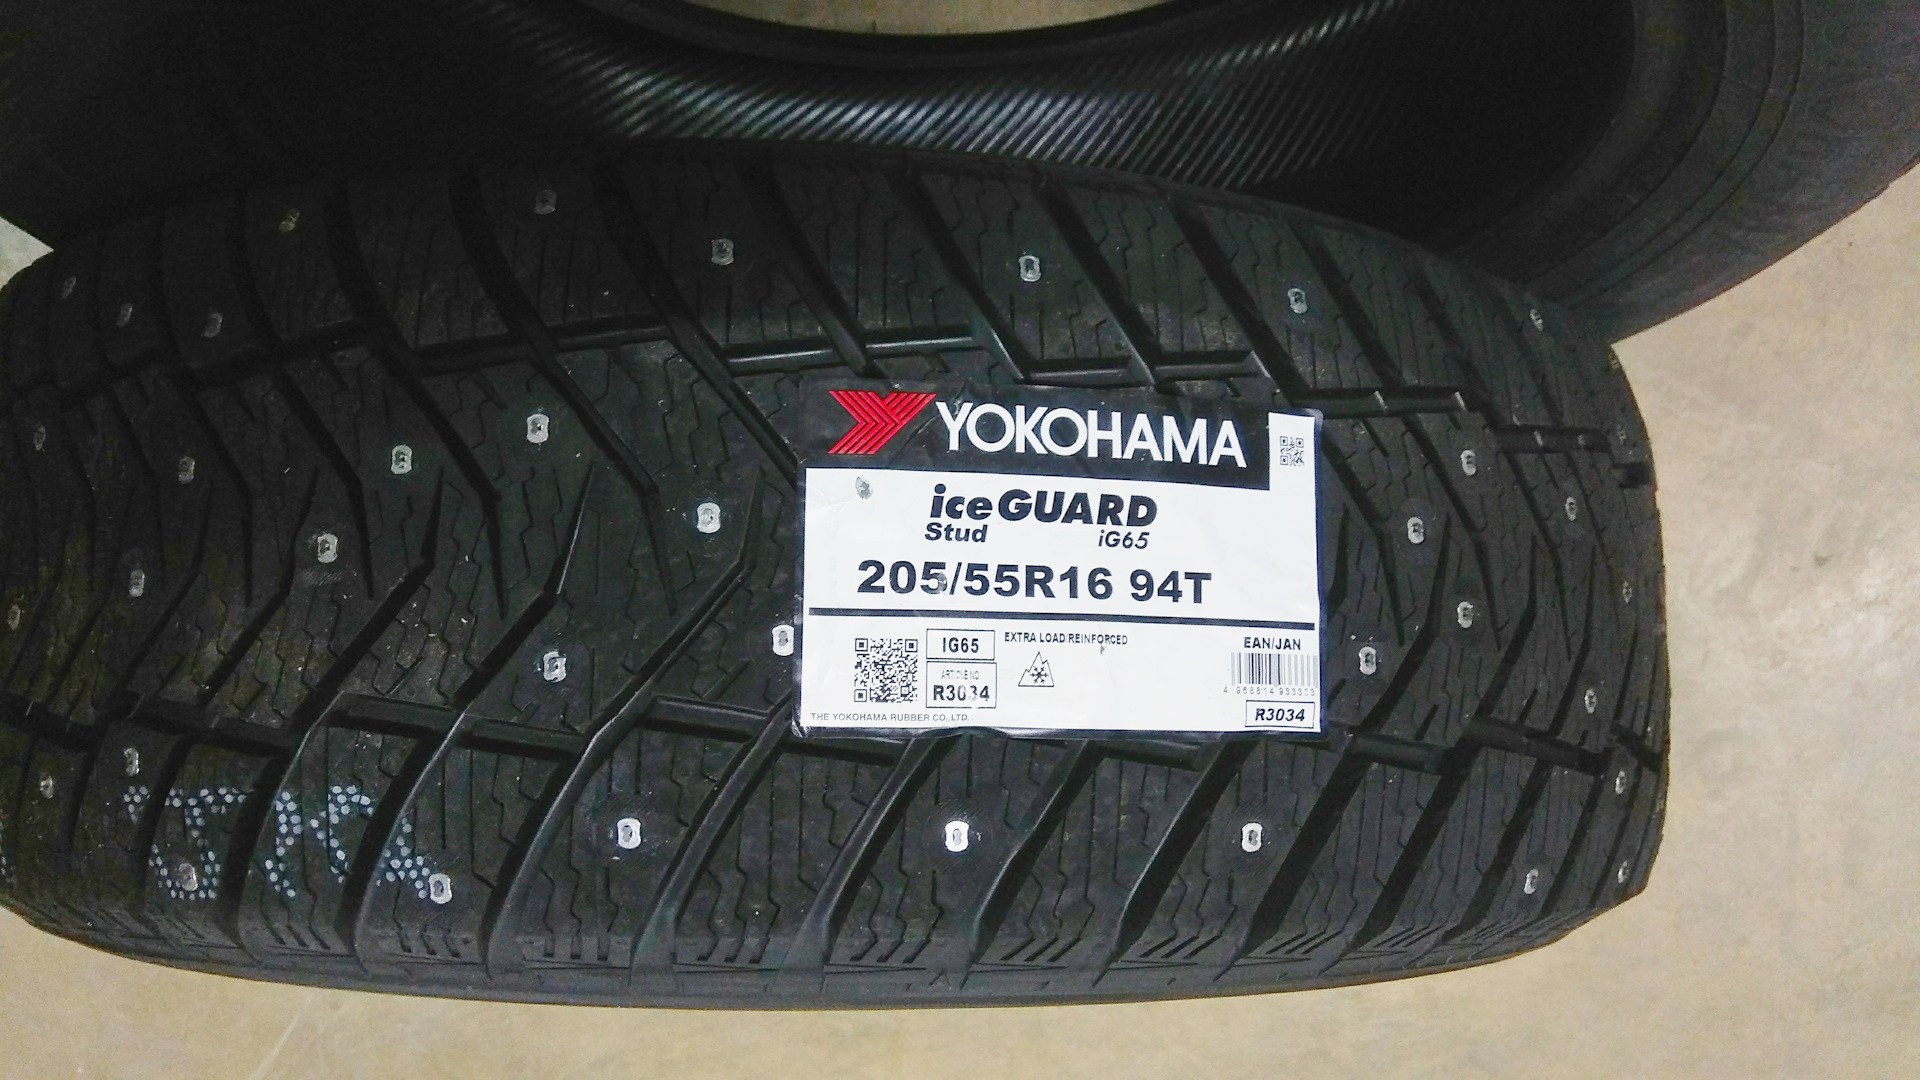 Айс гуард 65. Yokohama Ice Guard ig65. Yokohama Ice Guard ig55 215/65 r16. Зимние шины Yokohama Ice Guard ig65. Yokohama Ice Guard ig65 205/55 r16 94t.